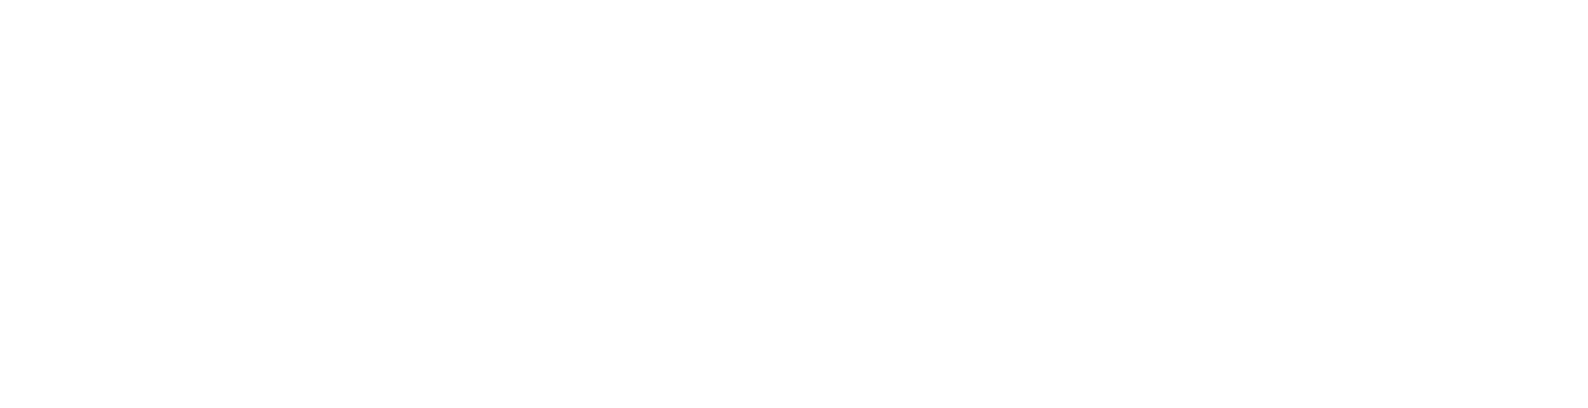 Quanterix logo large for dark backgrounds (transparent PNG)